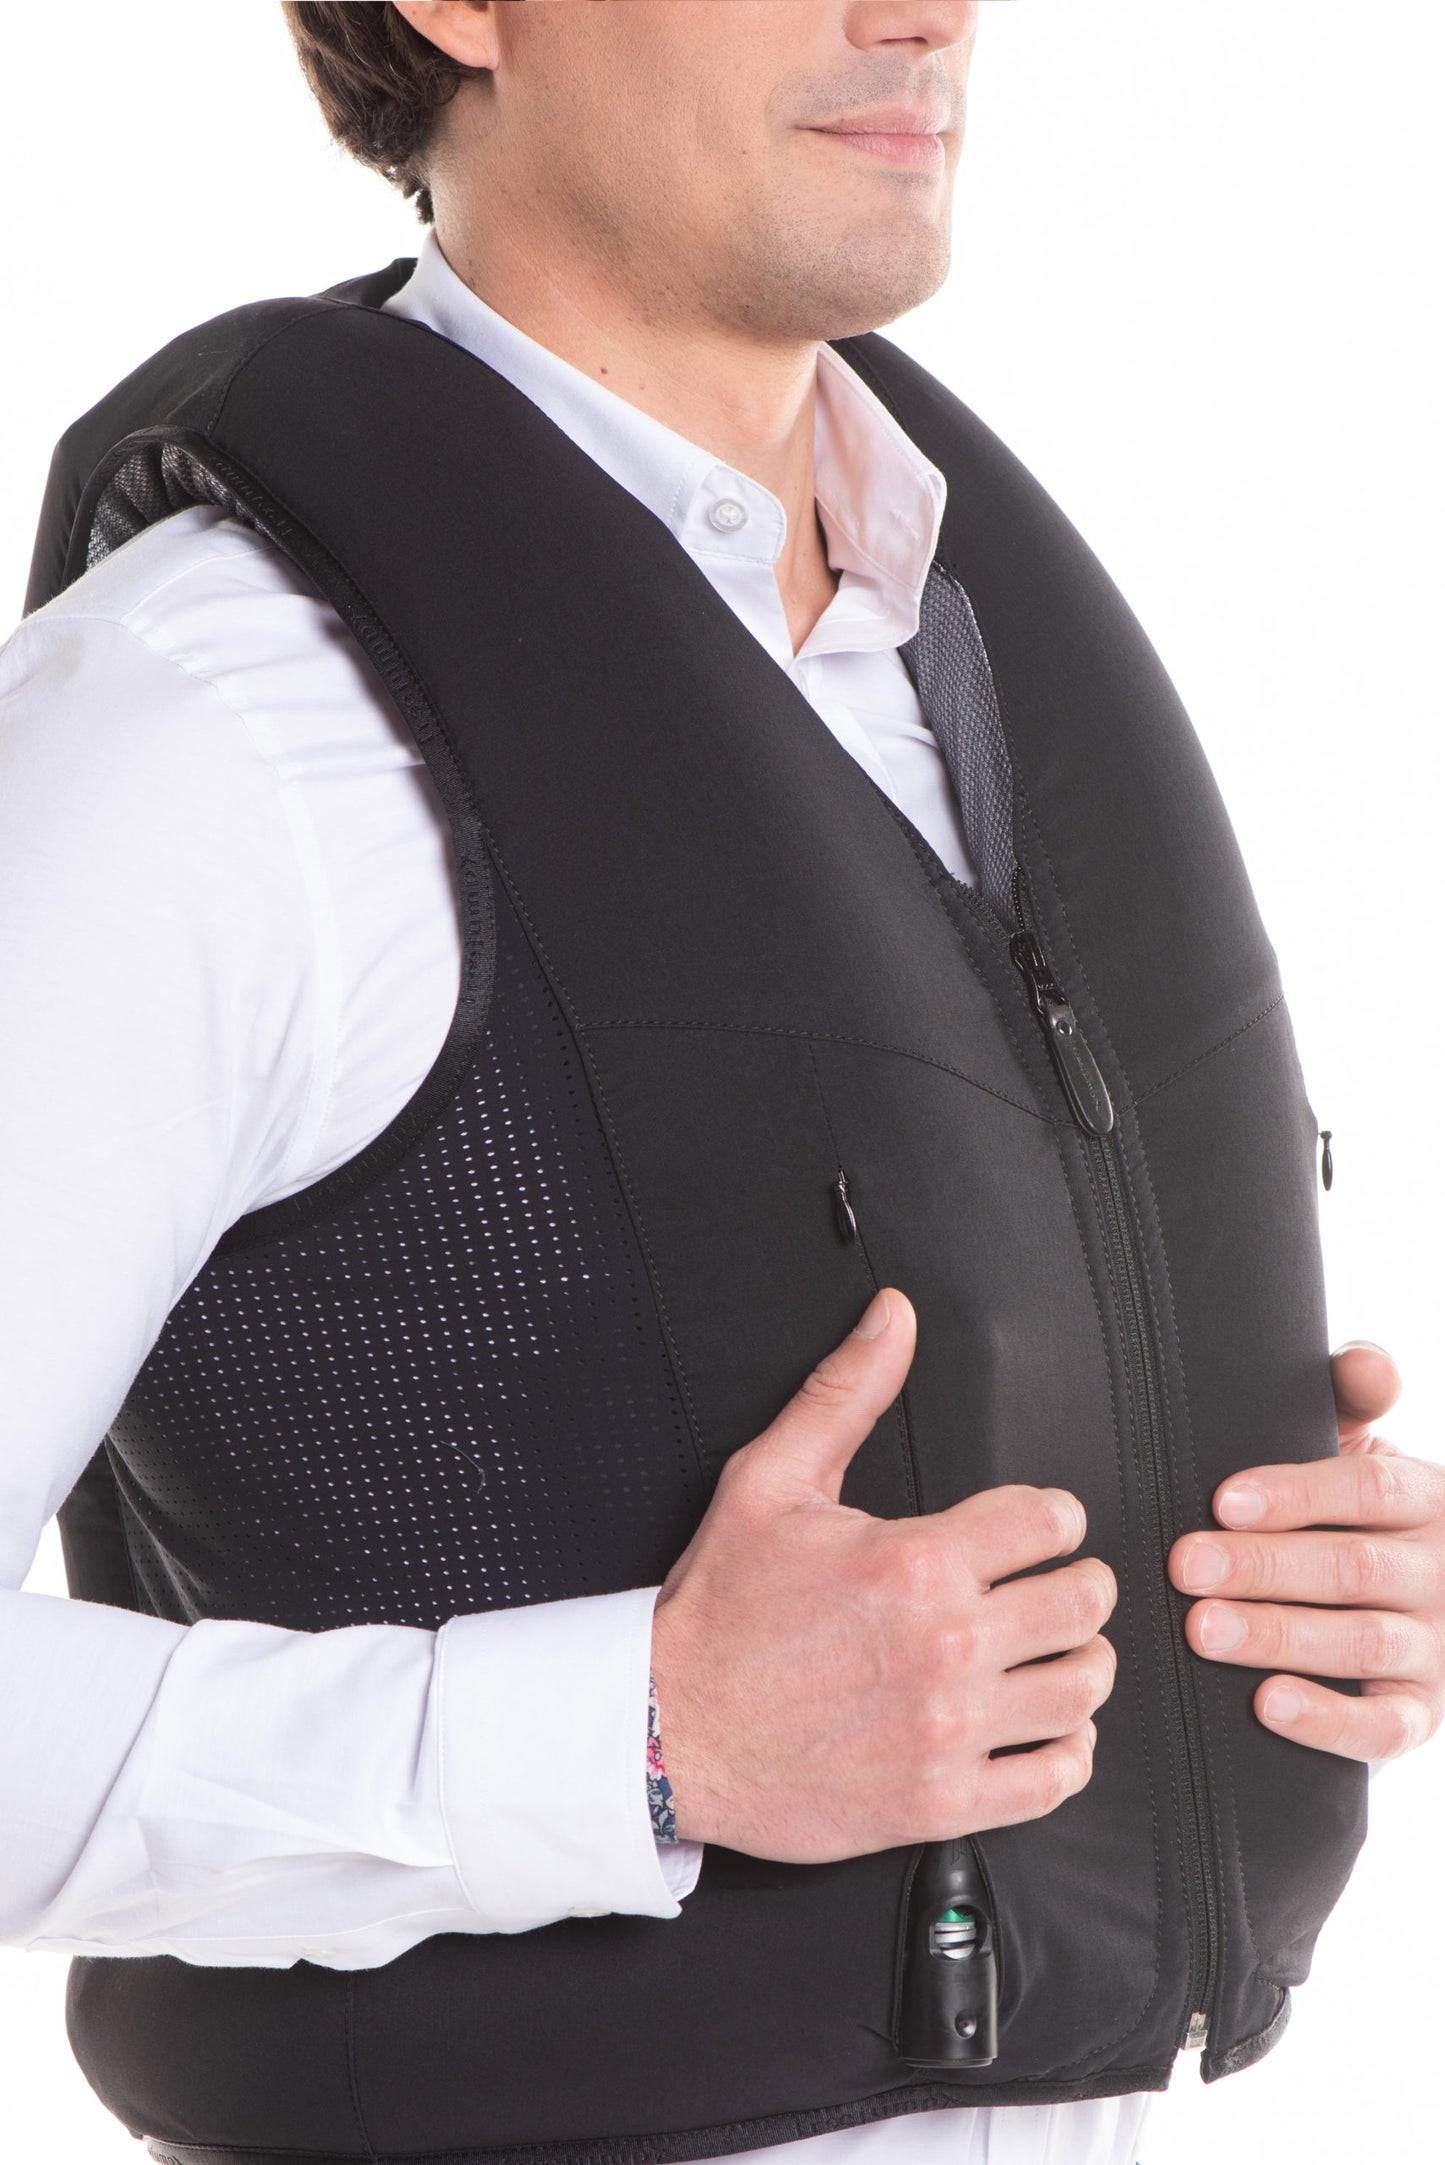 FreeJump Airbag Protective Vest